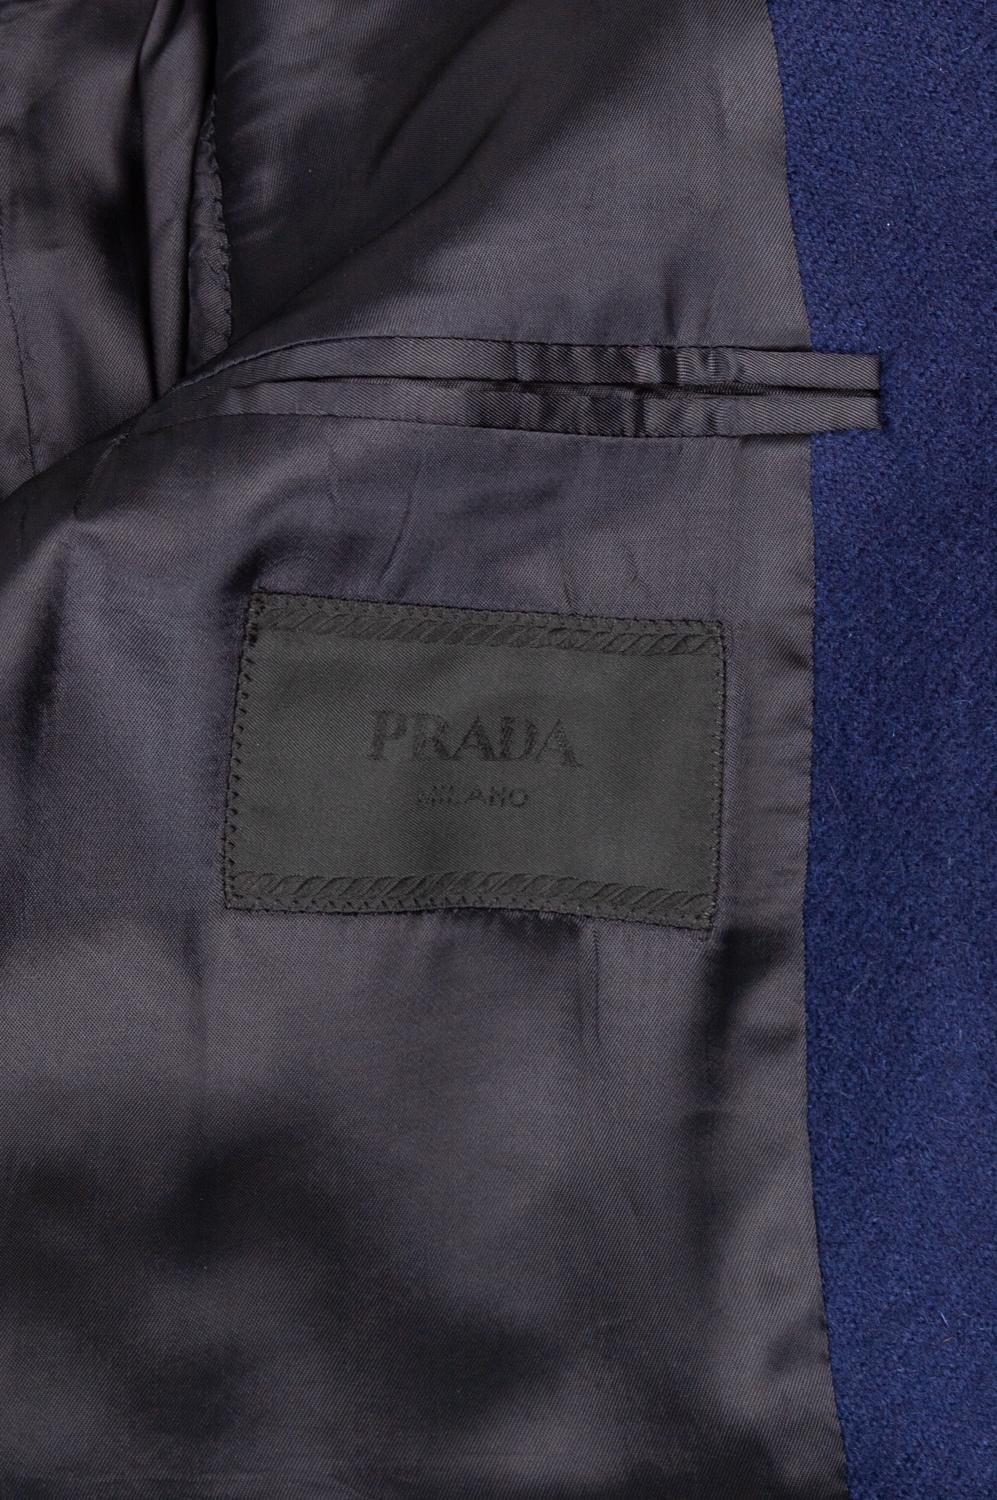 Prada Men Jacket Blazer Casual Size 50, S625 In Excellent Condition For Sale In Kaunas, LT